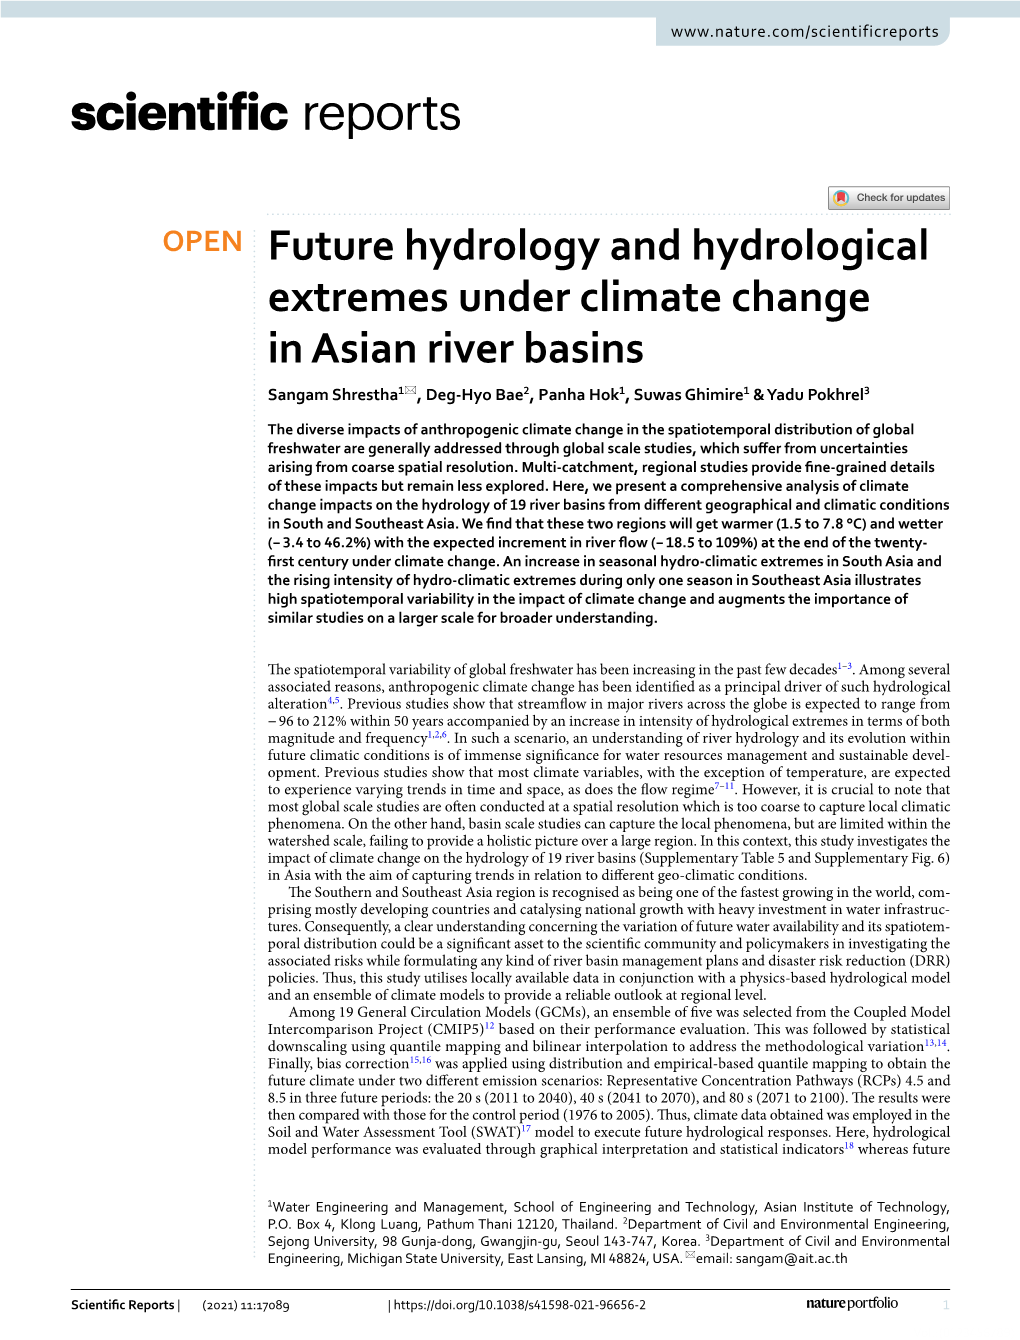 Future Hydrology and Hydrological Extremes Under Climate Change in Asian River Basins Sangam Shrestha1*, Deg‑Hyo Bae2, Panha Hok1, Suwas Ghimire1 & Yadu Pokhrel3